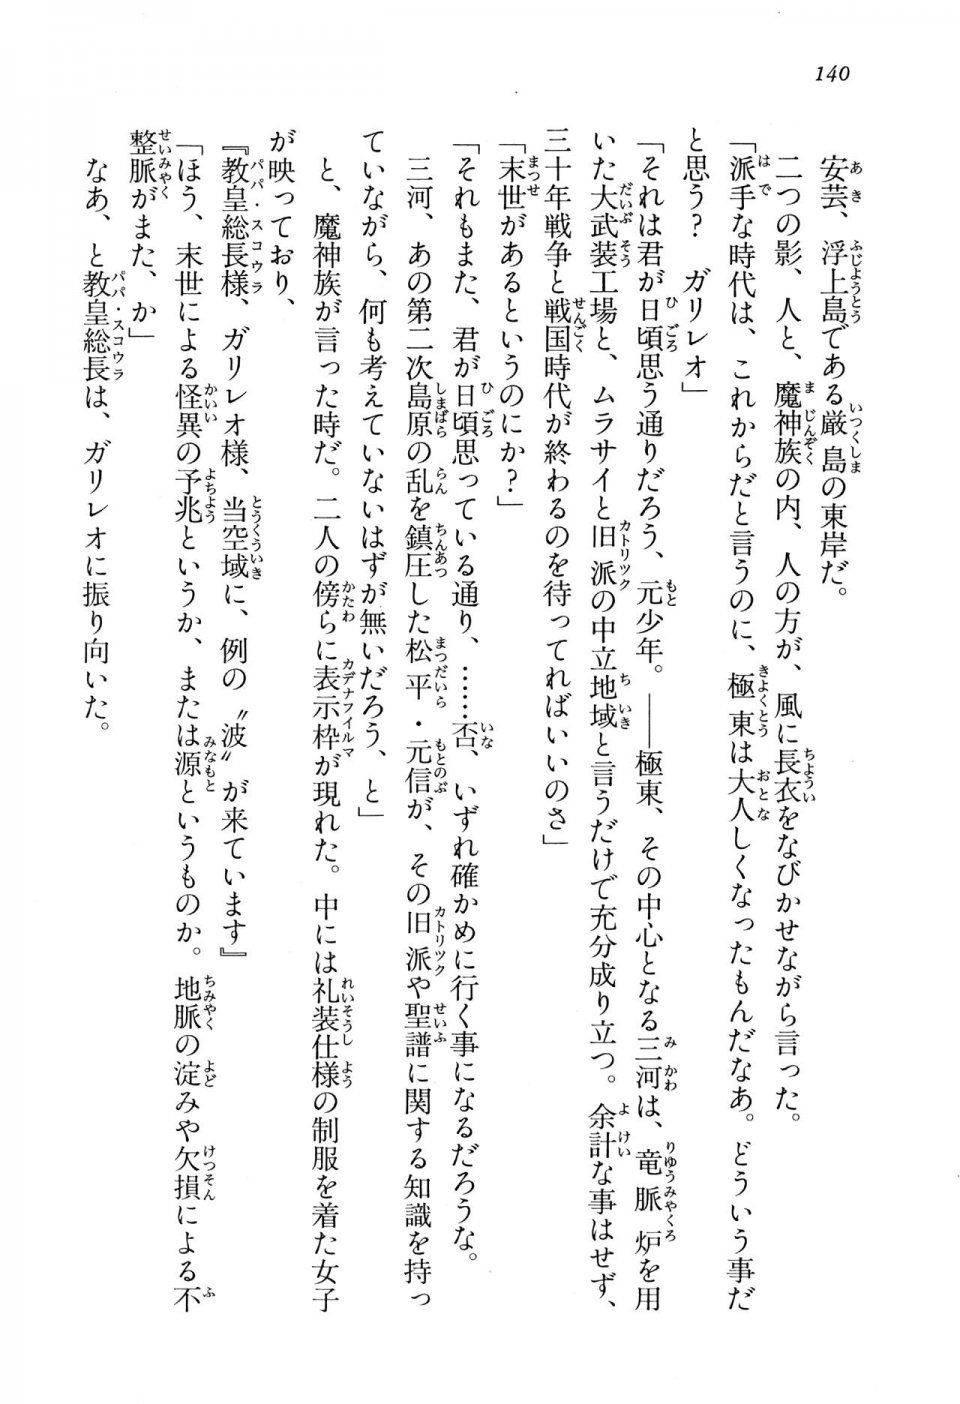 Kyoukai Senjou no Horizon BD Special Mininovel Vol 3(2A) - Photo #144